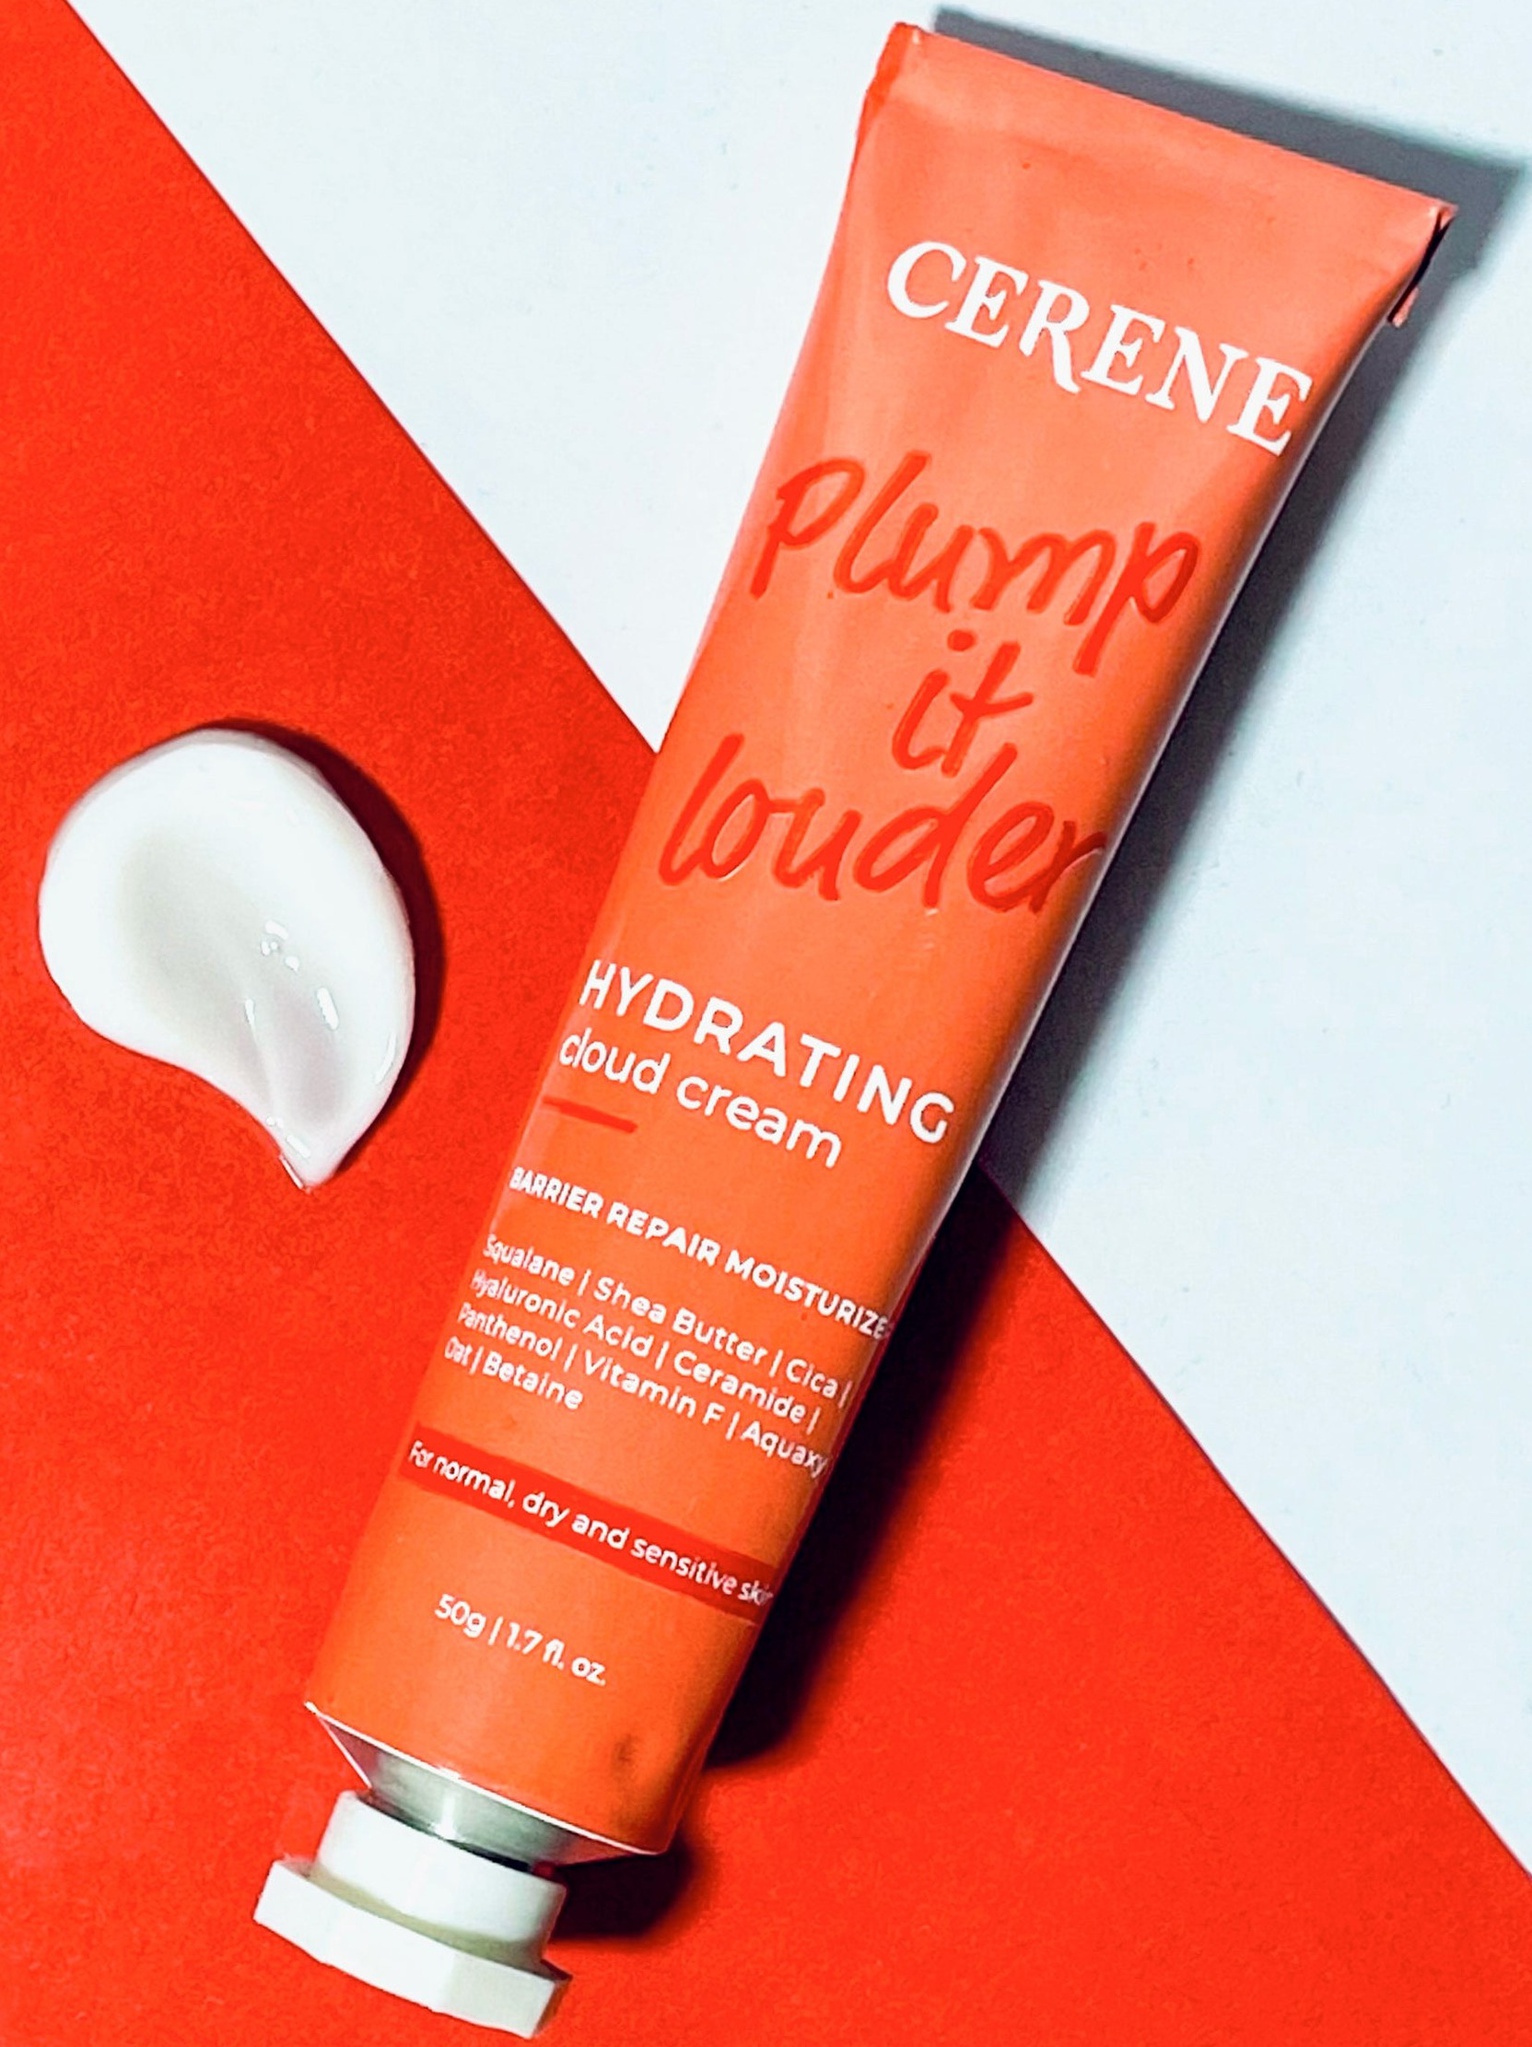 Cerene Hydrating Cloud Cream